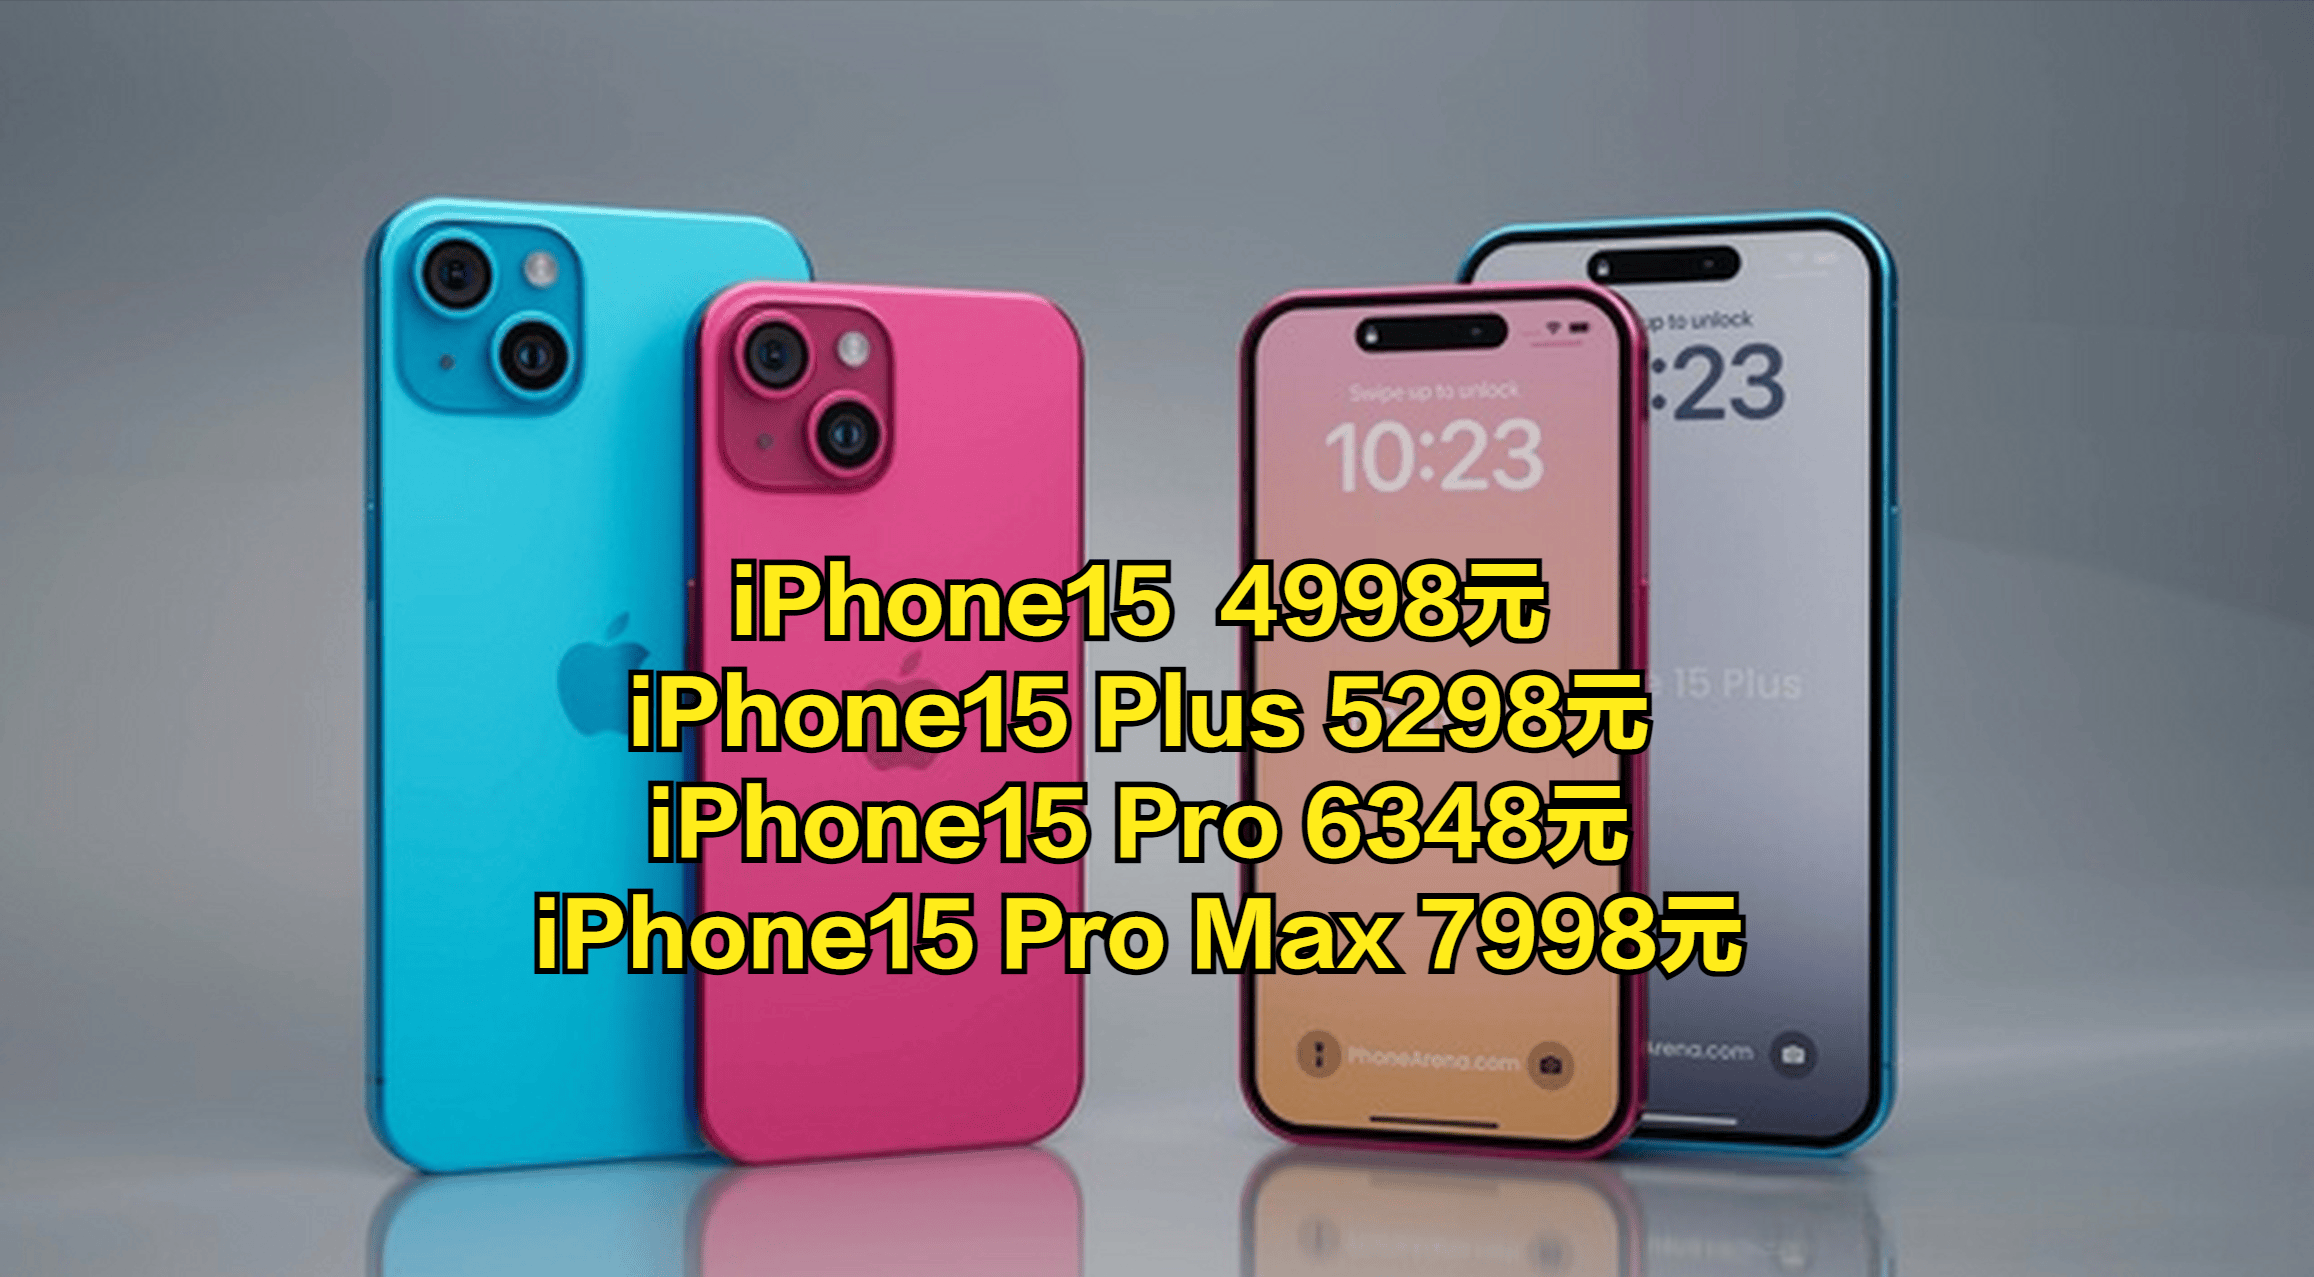 iPhone 15 Price Slash